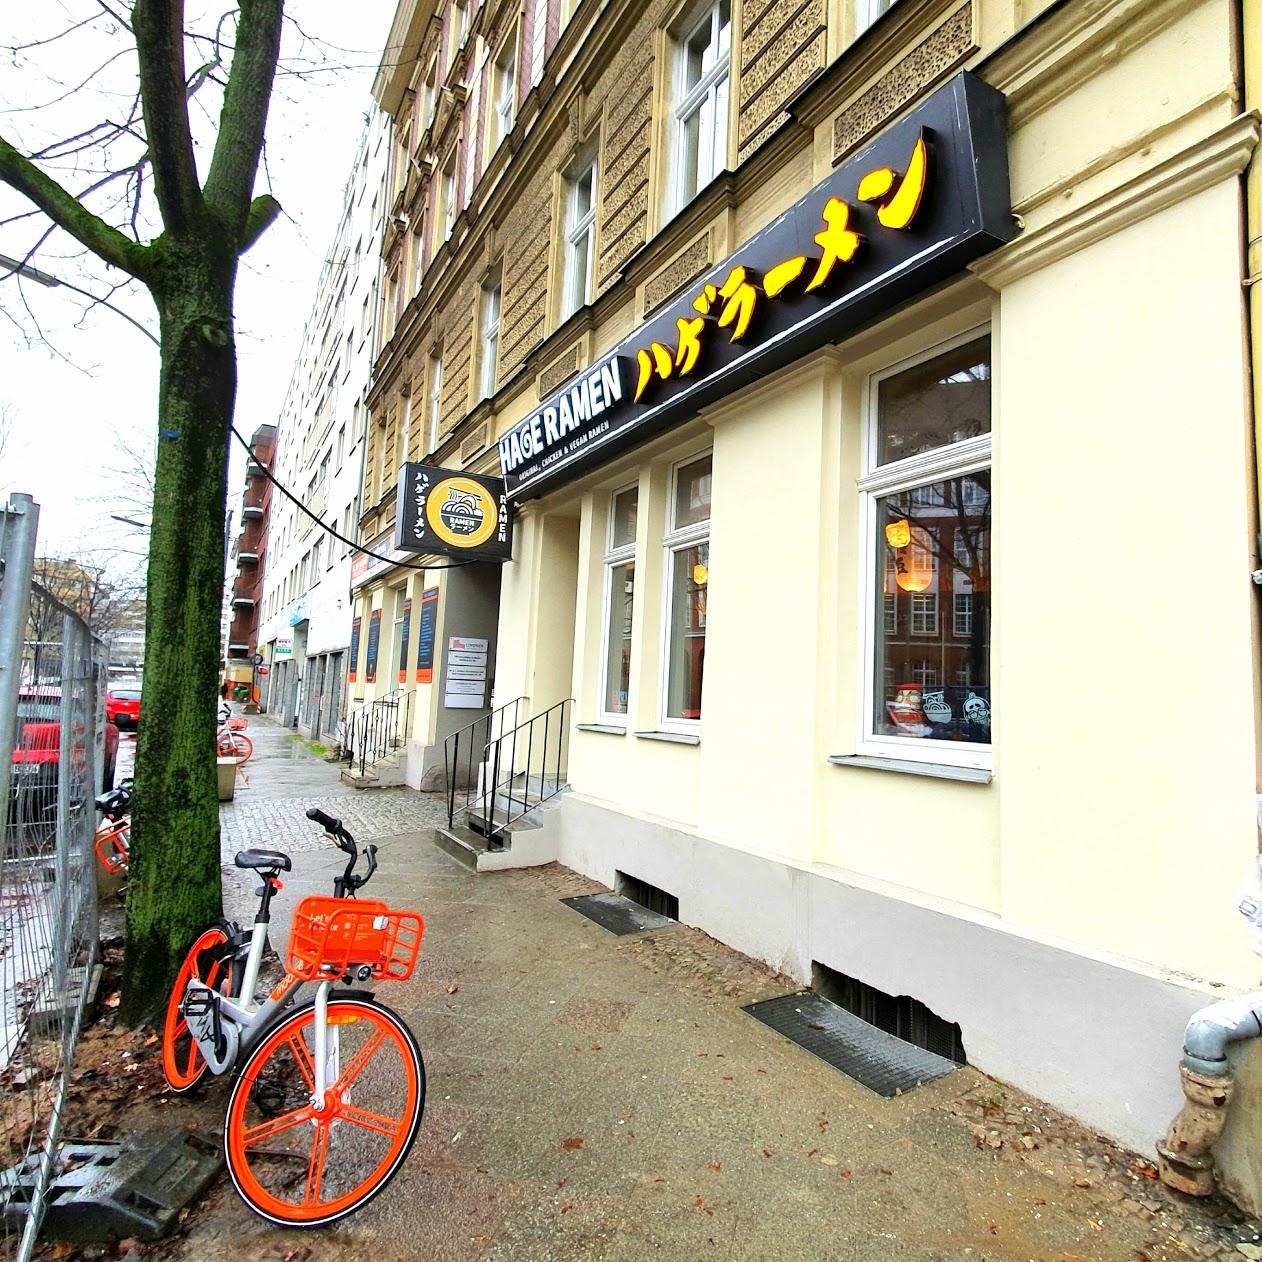 Restaurant "Hage Ramen" in Berlin